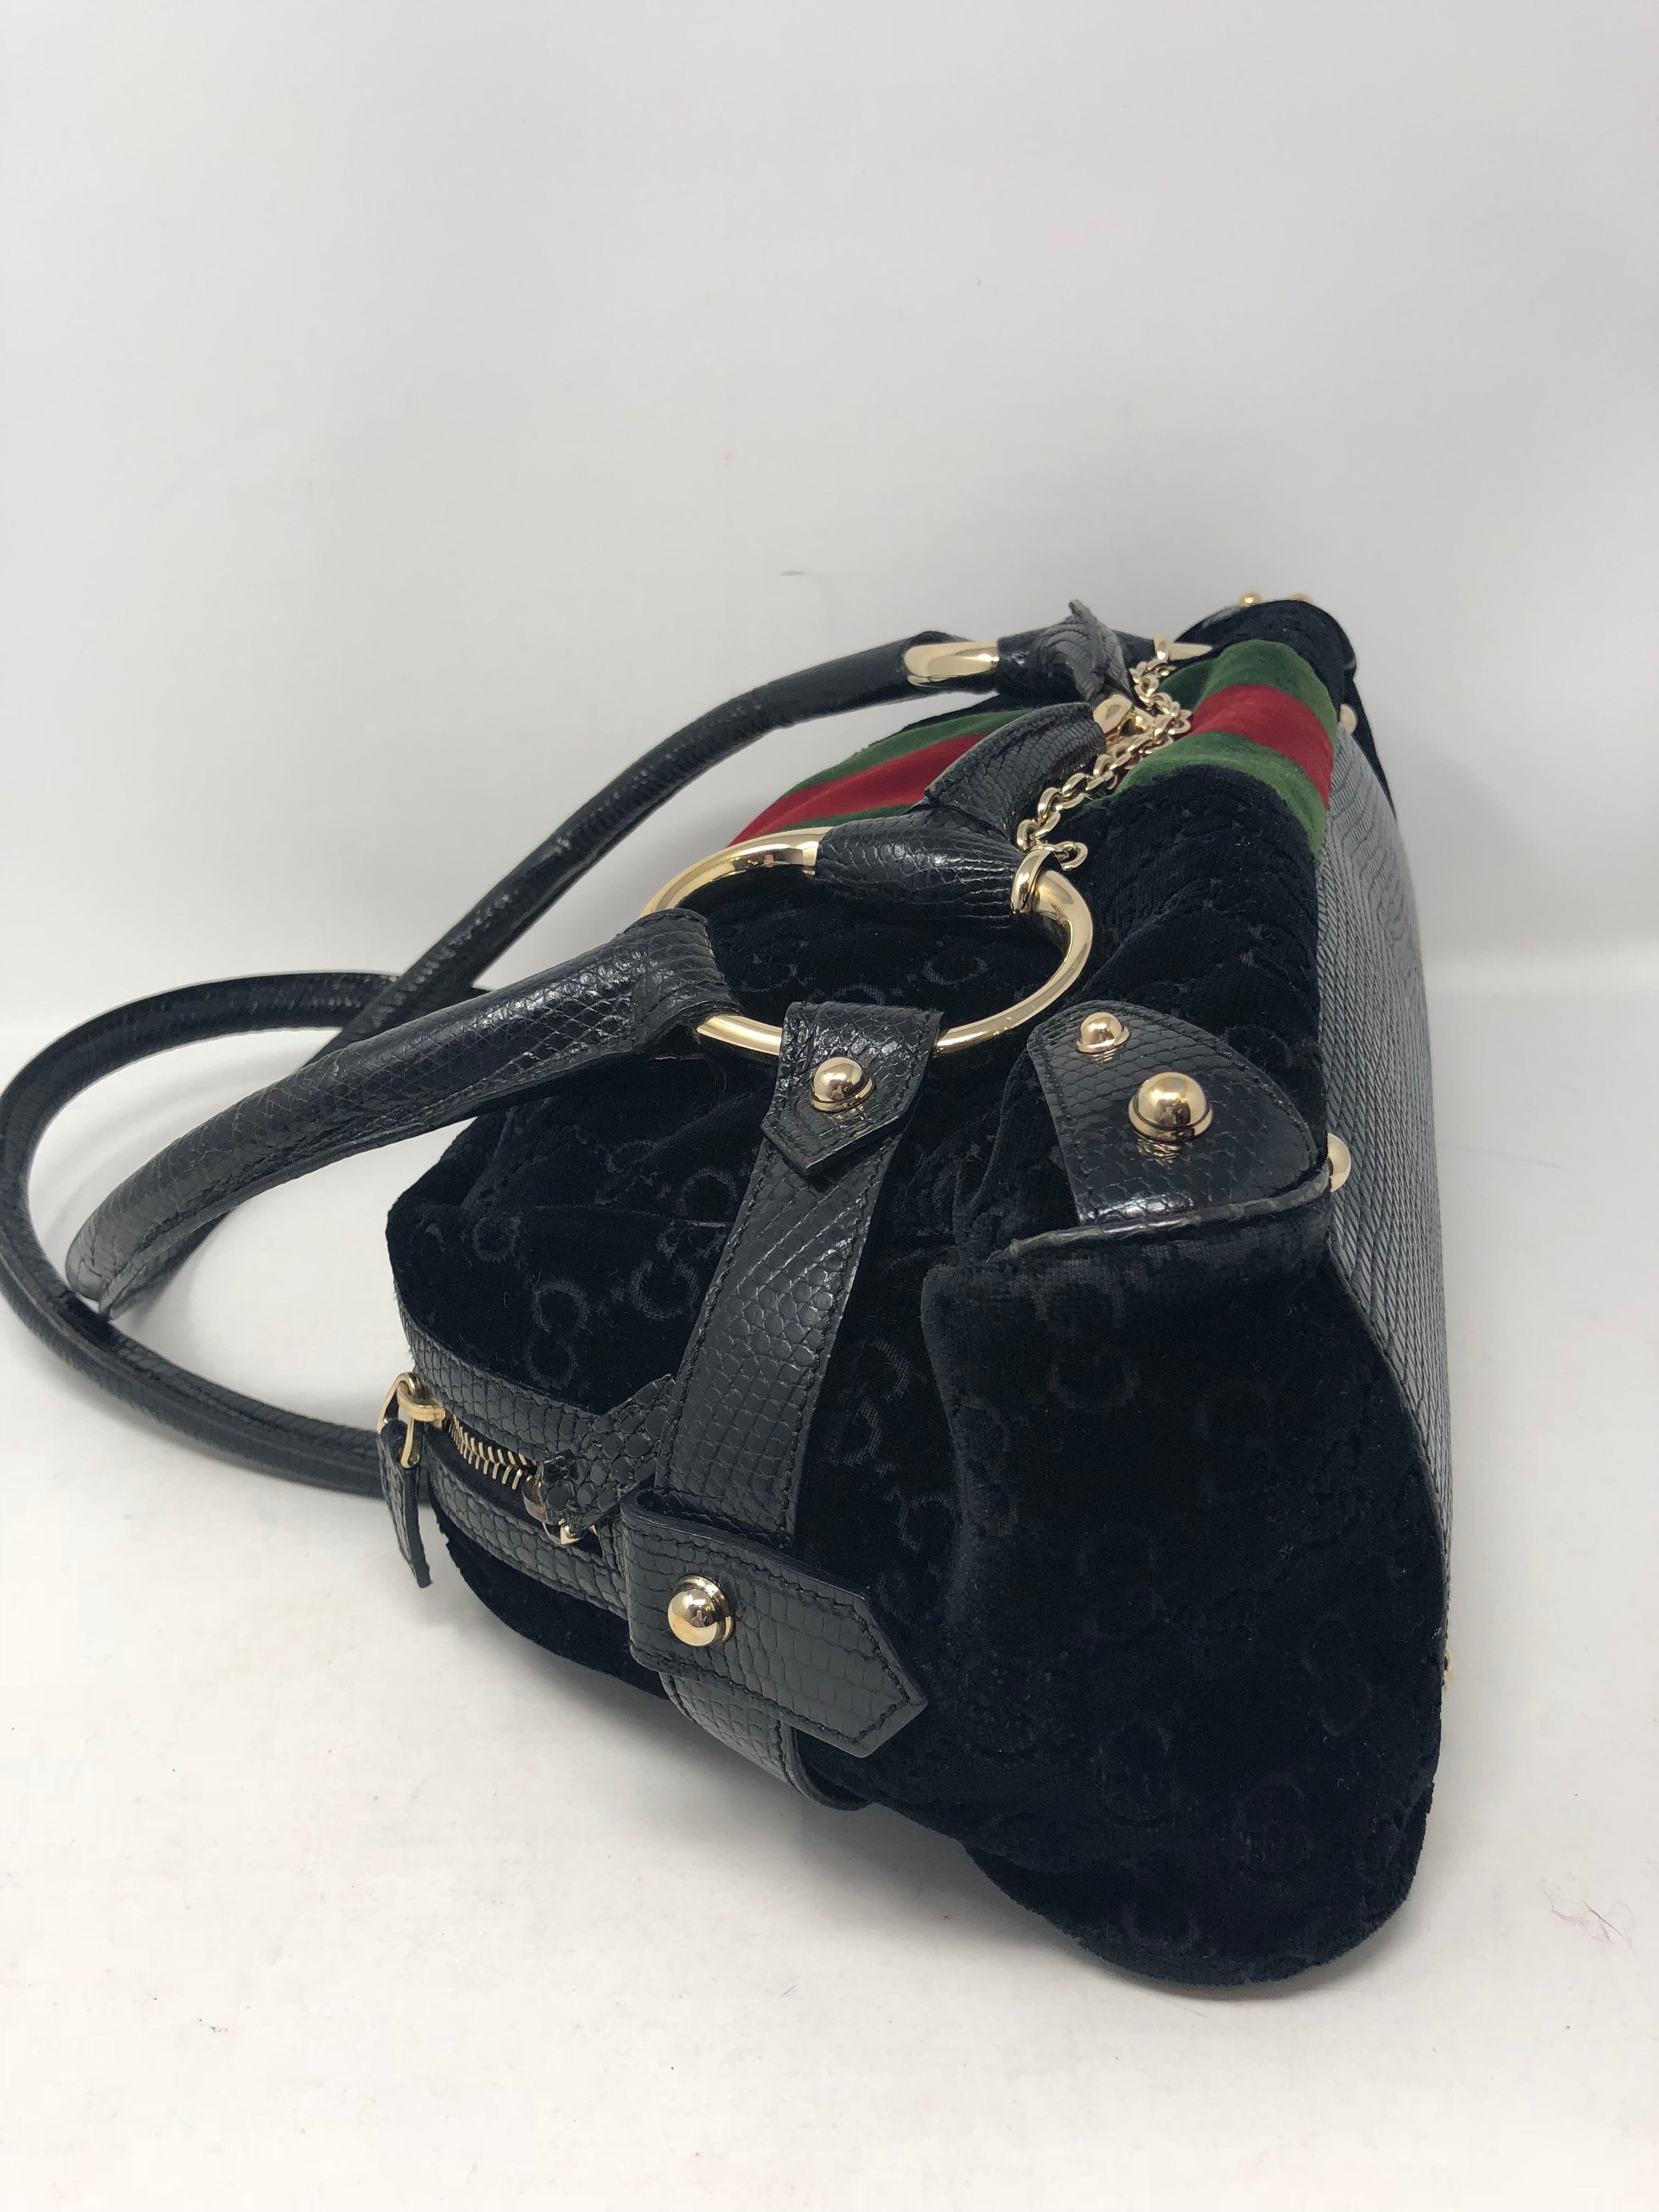 Black Gucci Limited Edition Bag